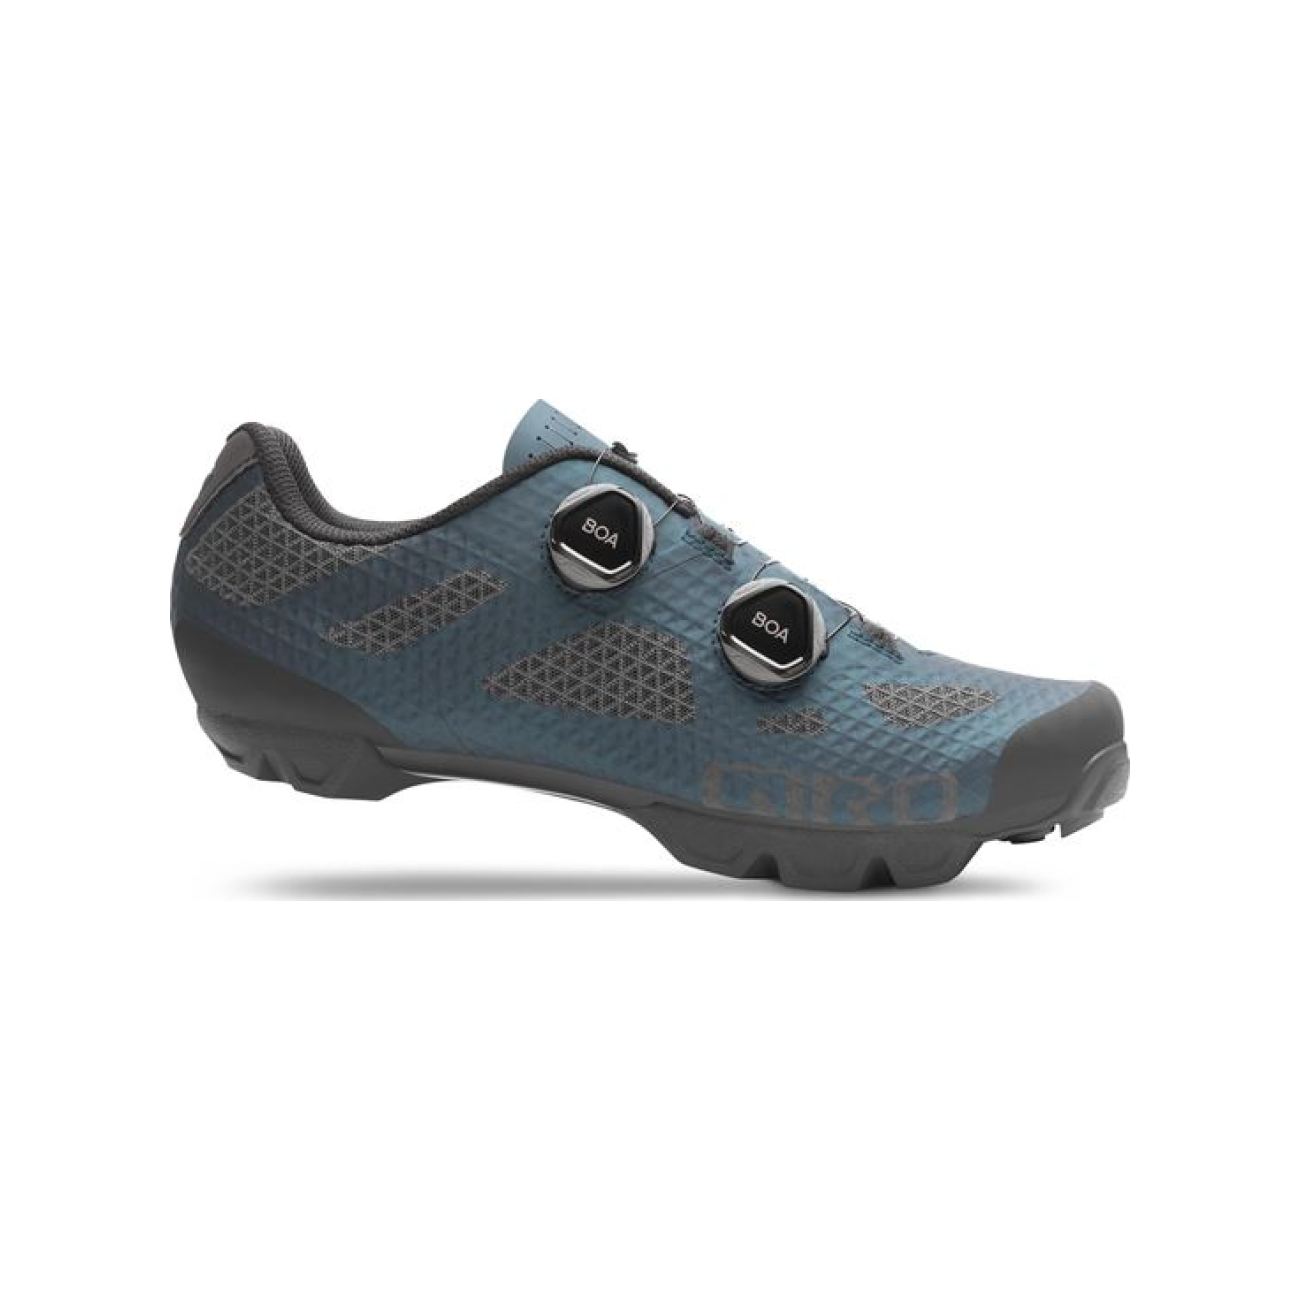 GIRO Kerékpáros Cipő - SECTOR - Kék